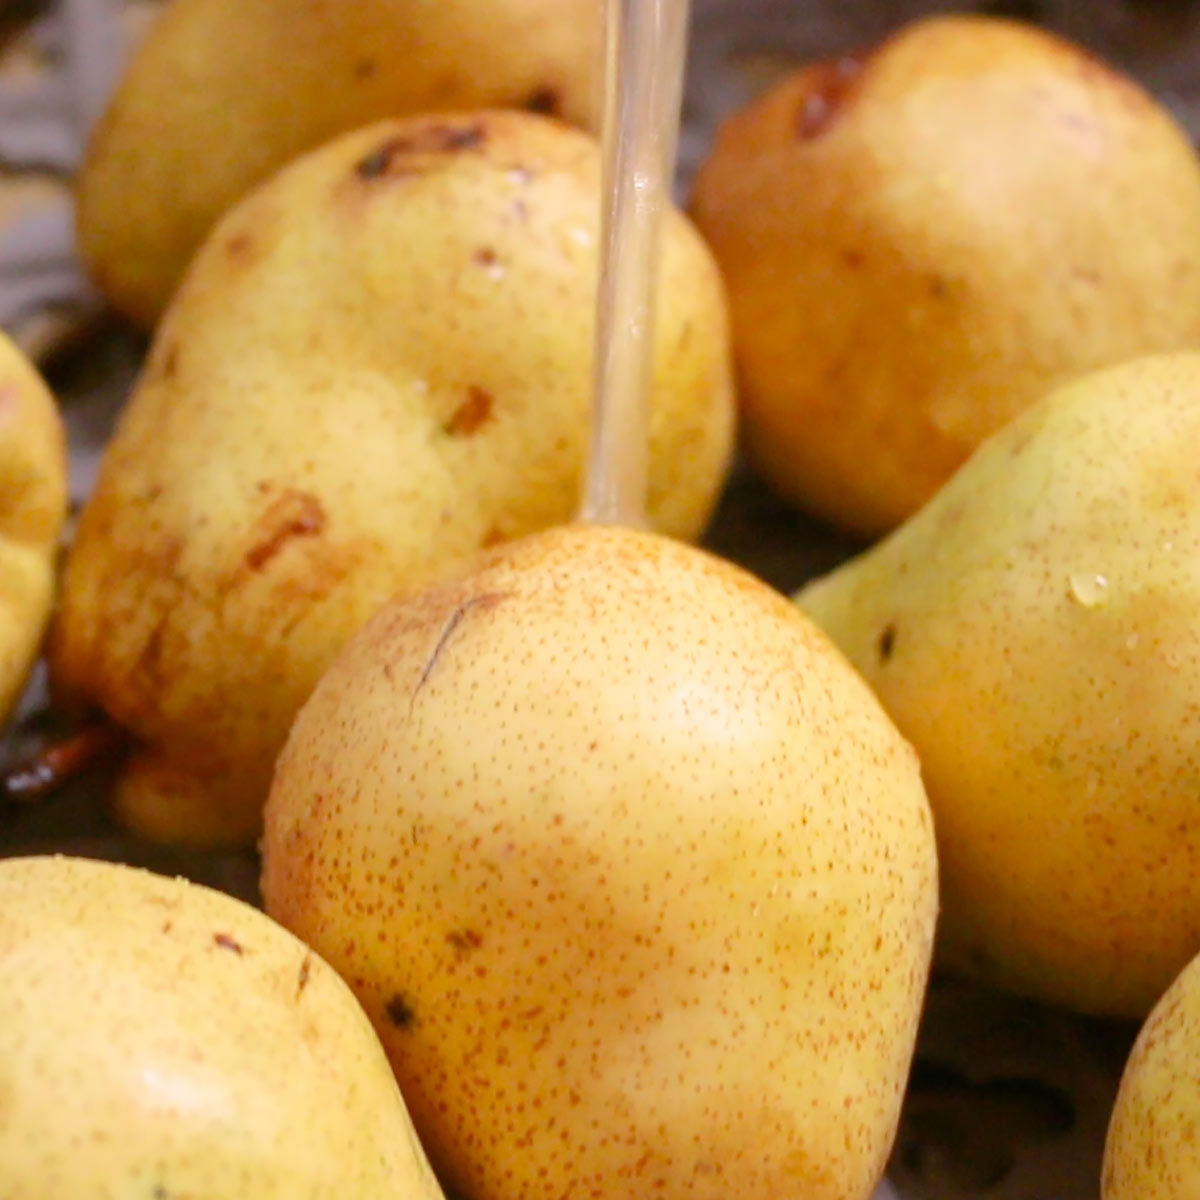 rinse pears